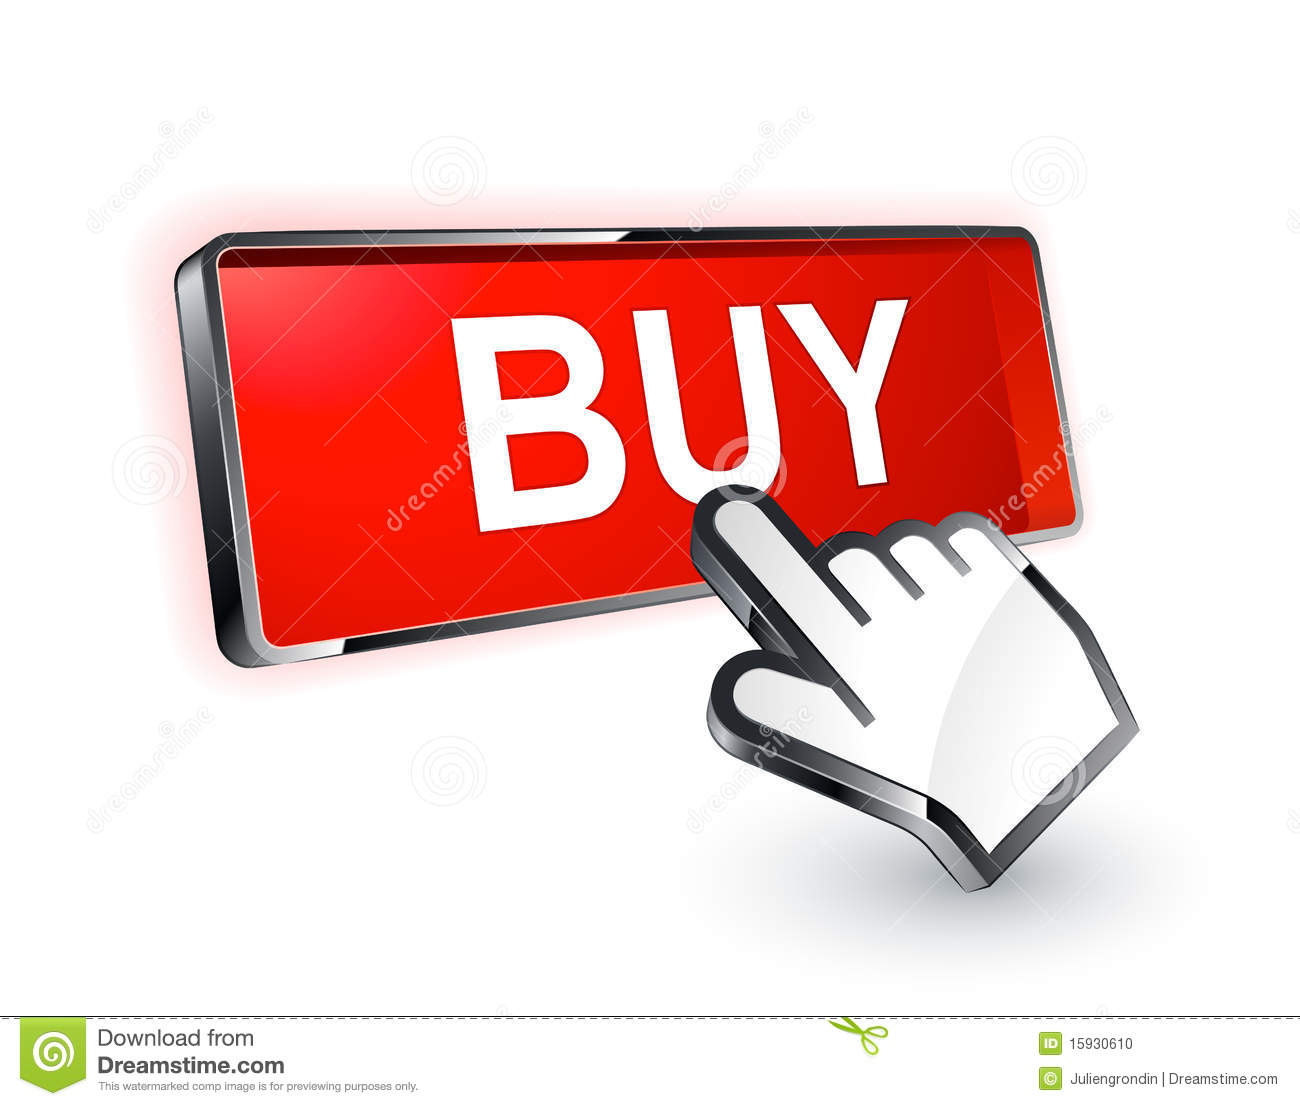 buy-button-15930610.jpg